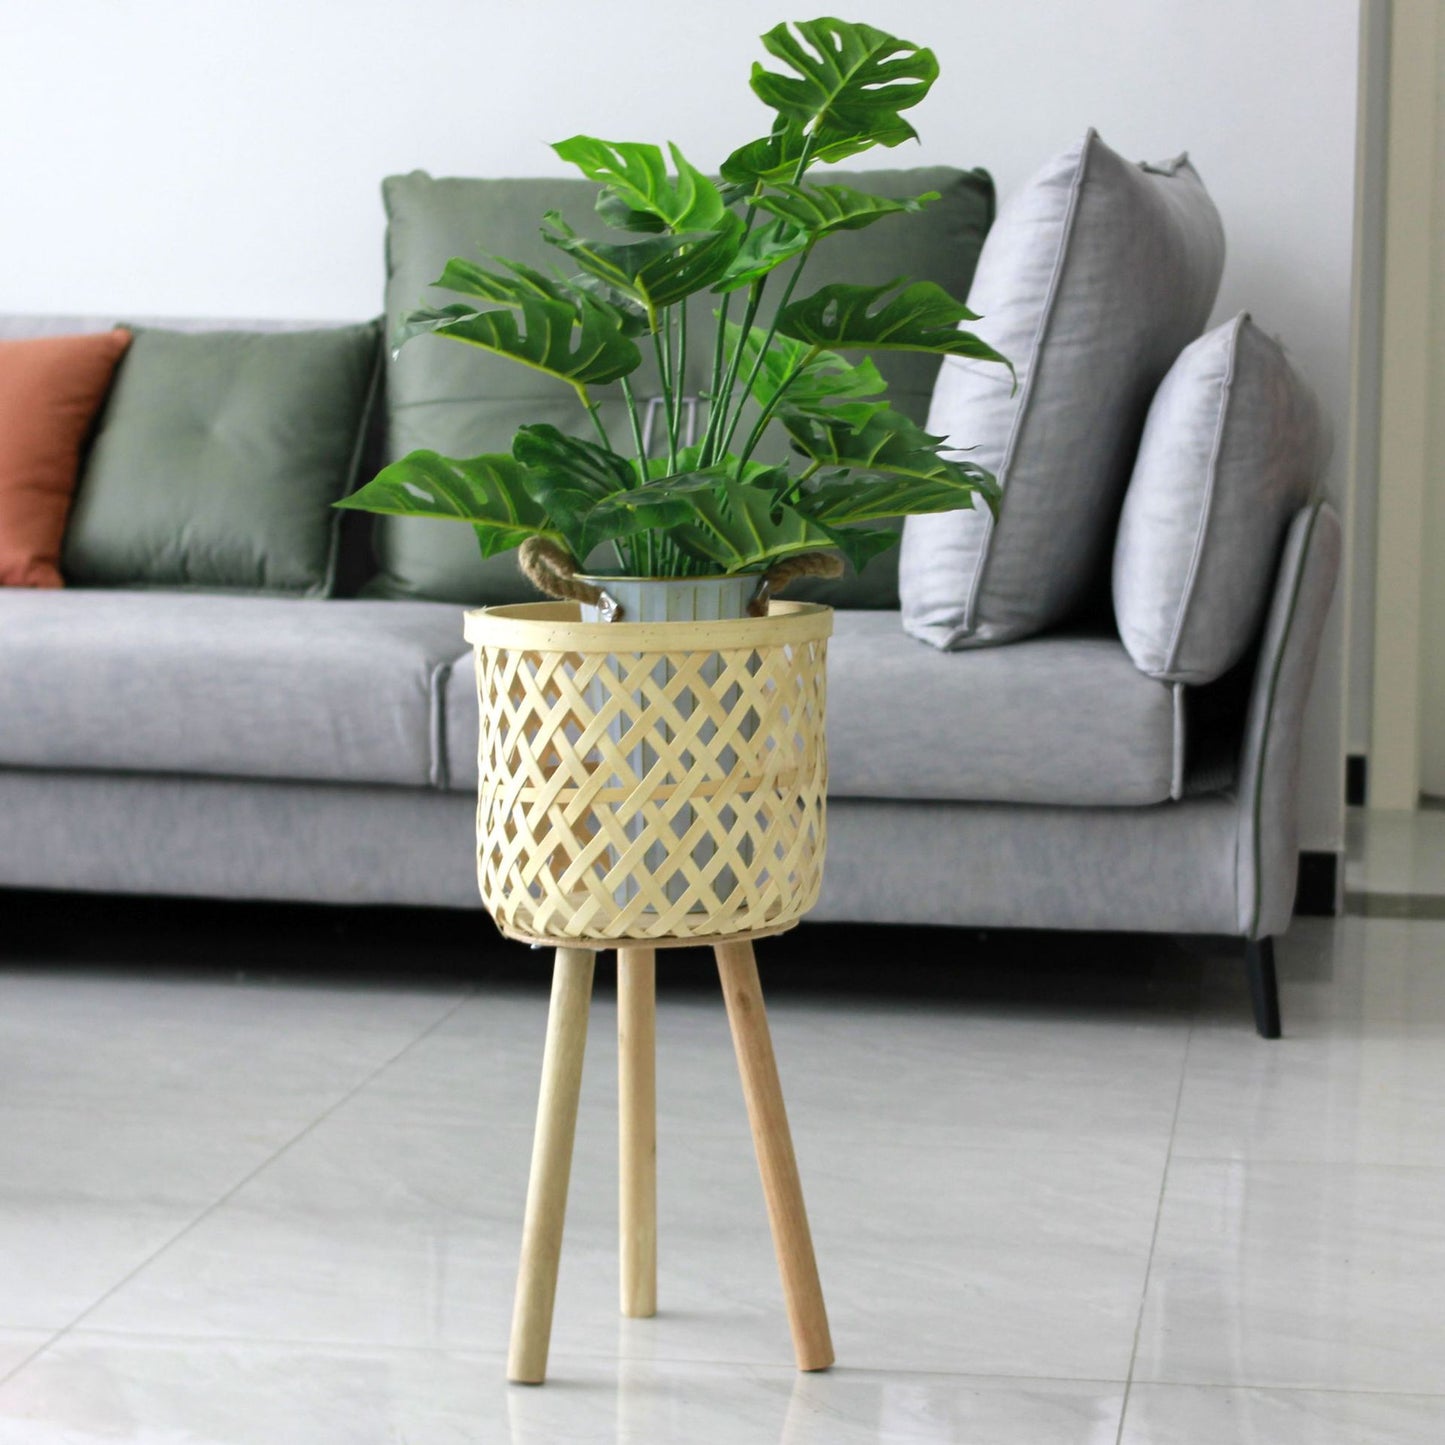 Bamboo Woven Living Room Floor Flower Stand